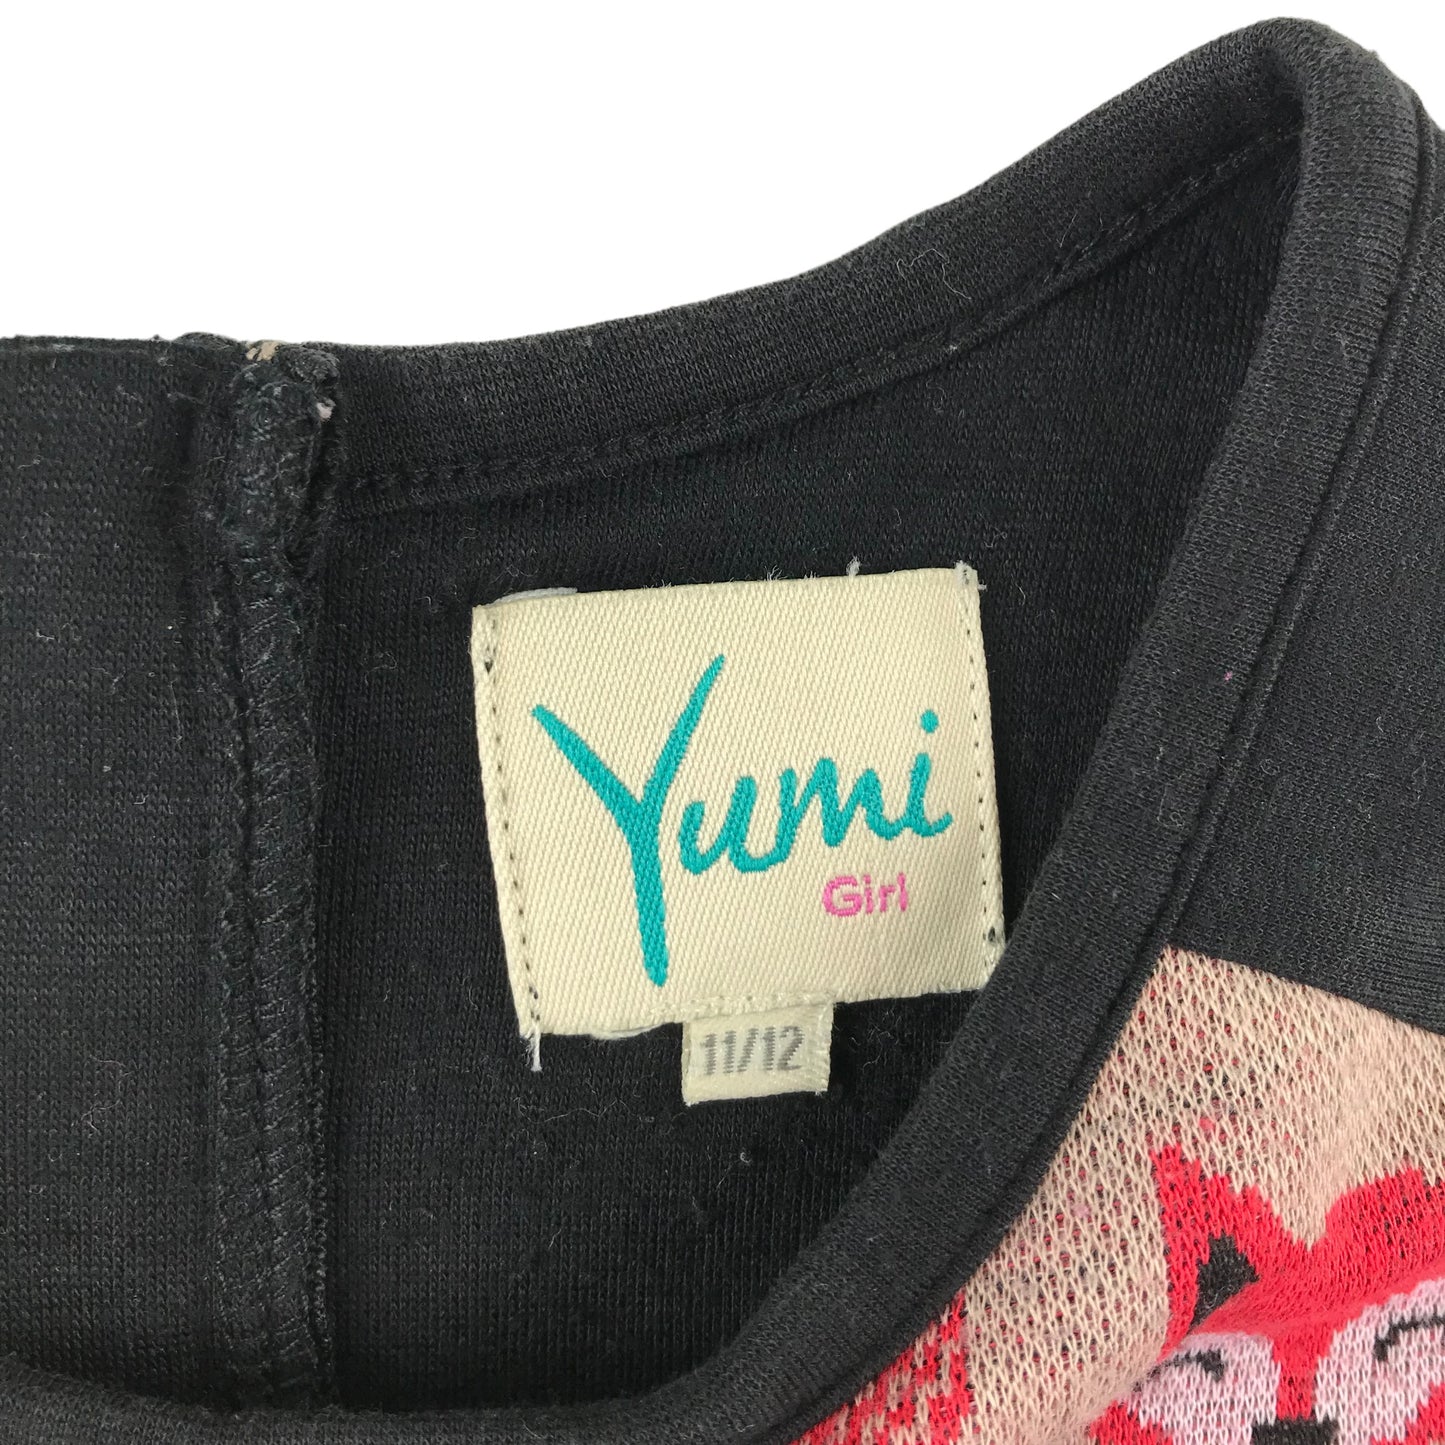 Yumi Dress Age 11 Brown Fox and Love Heart Print Design